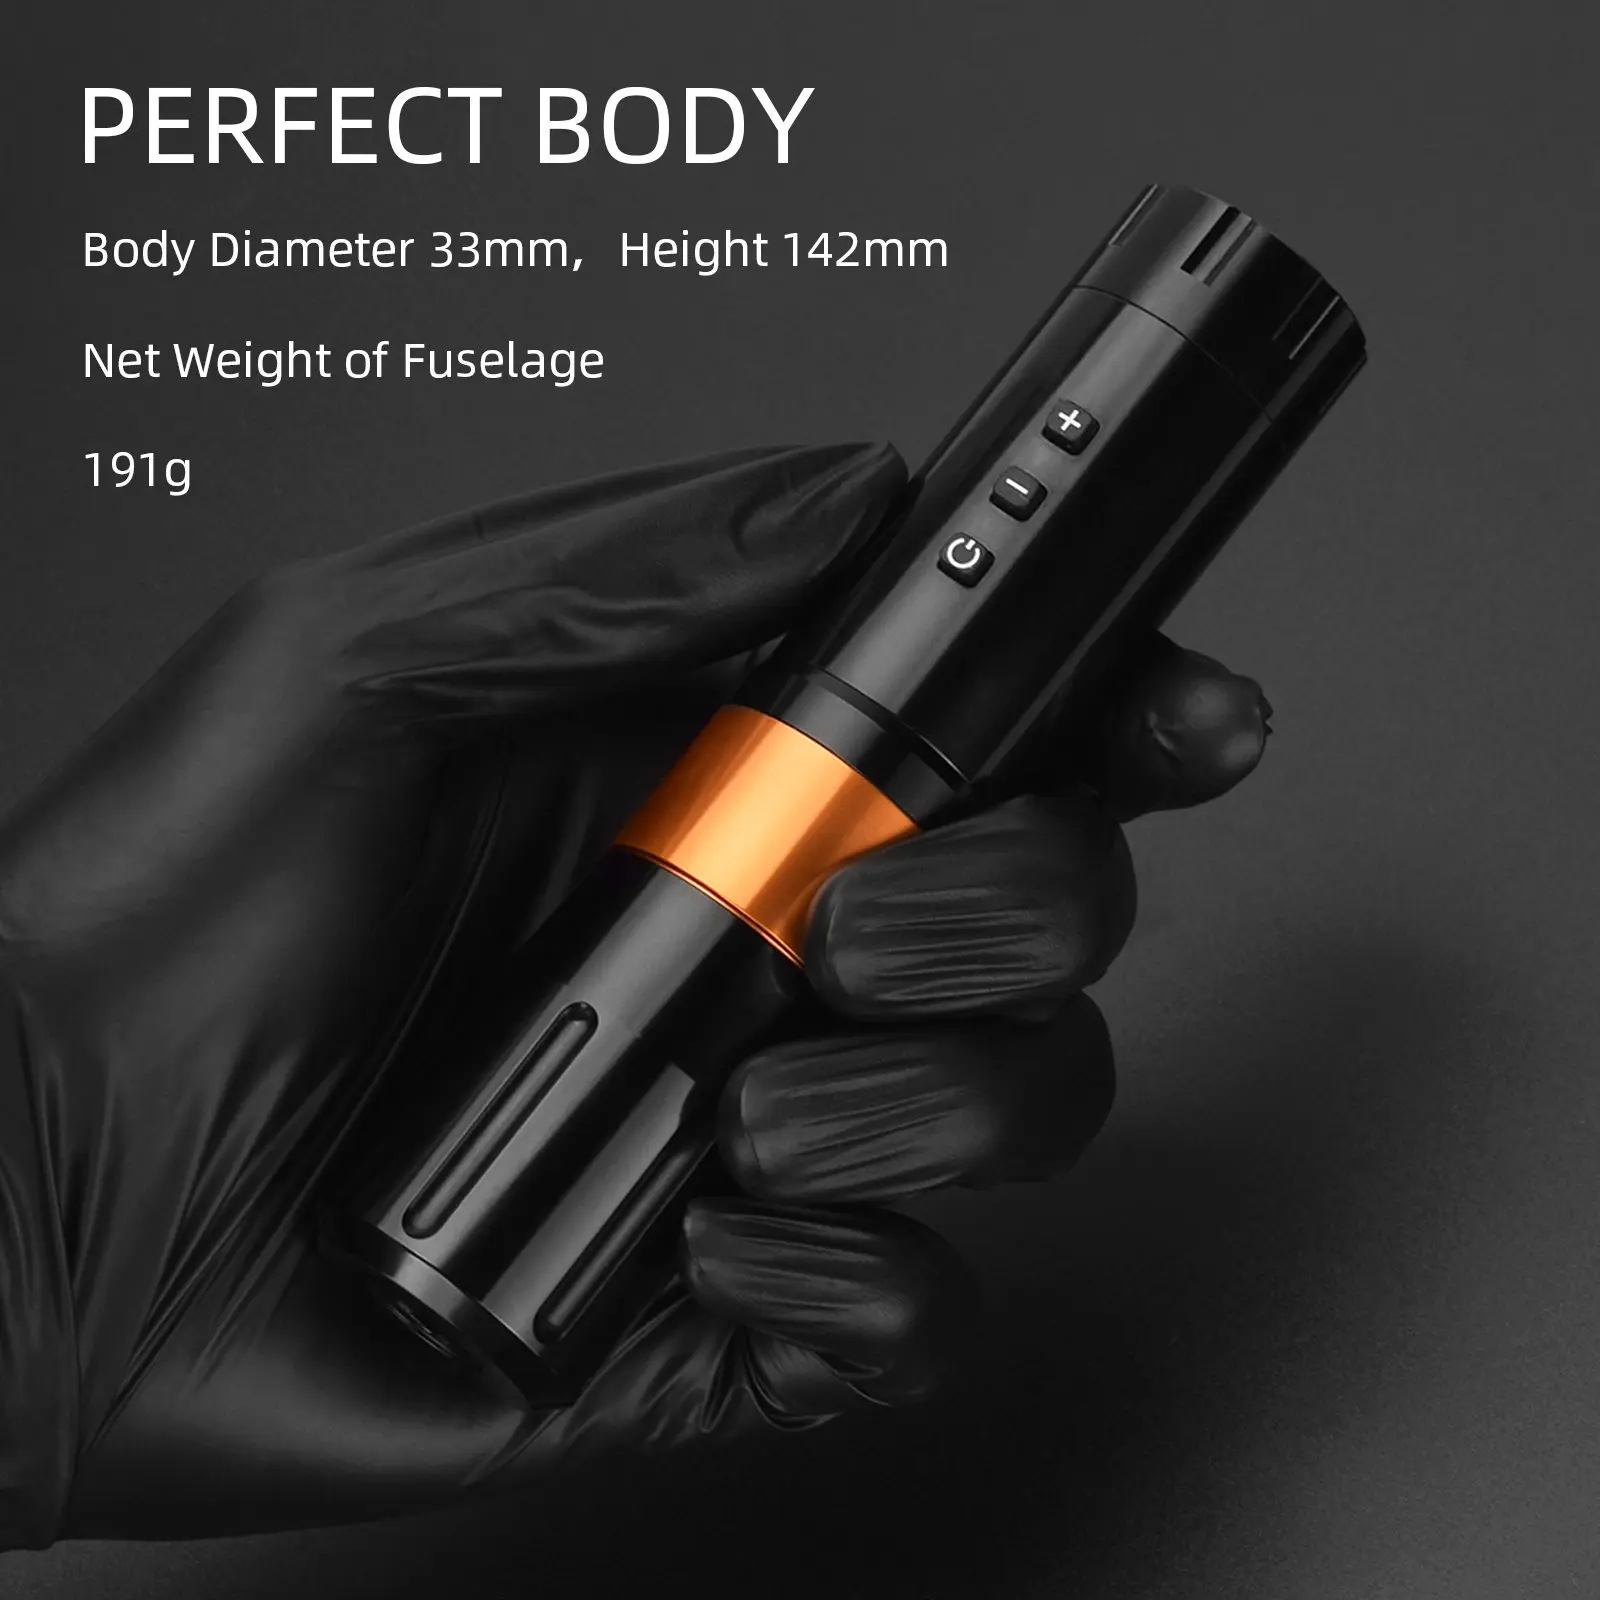 Portable Wireless Tattoo Machine Pen Built in Batter LCD Display Screen Strong Motor Tattoo Pen Fast Charging Tattoo Supplies